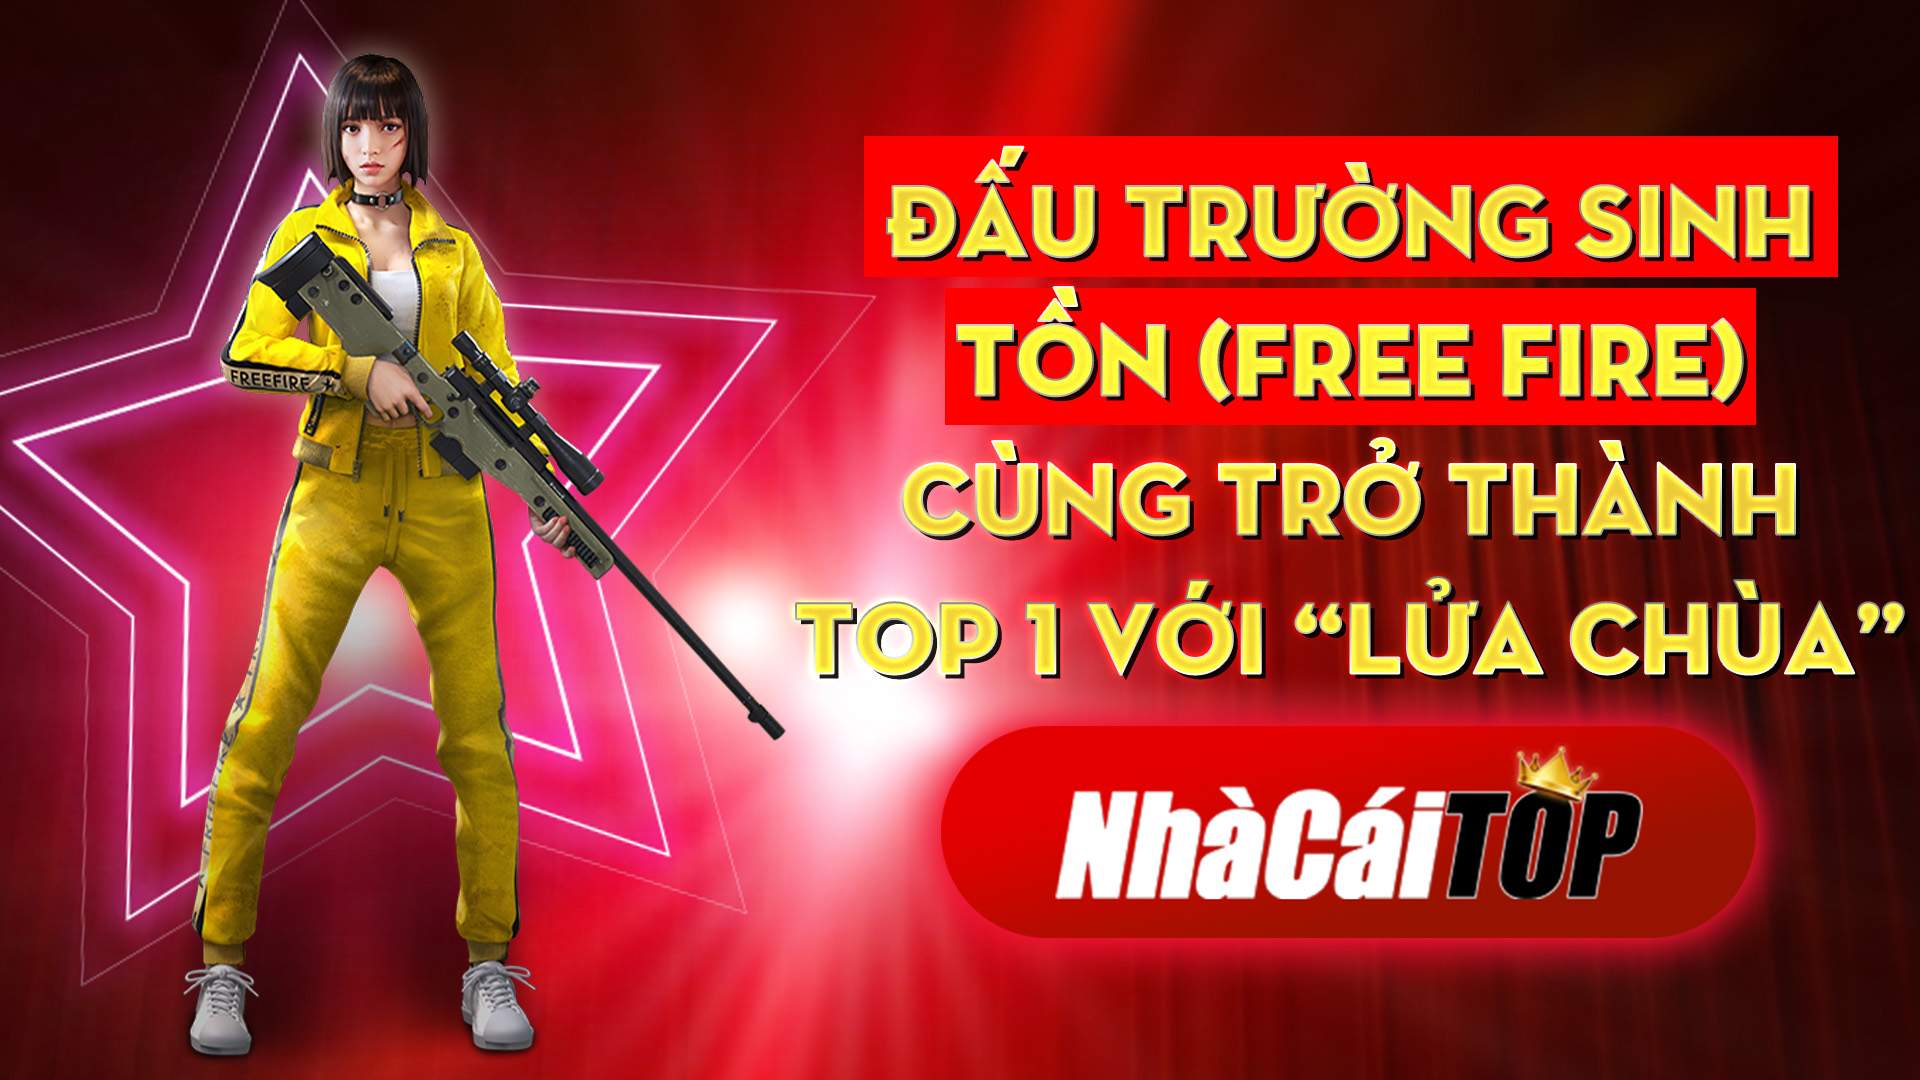 354 Djau Truong Sinh Ton Free Fire – Cung Tro Thanh Top 1 Voi Lua Chua